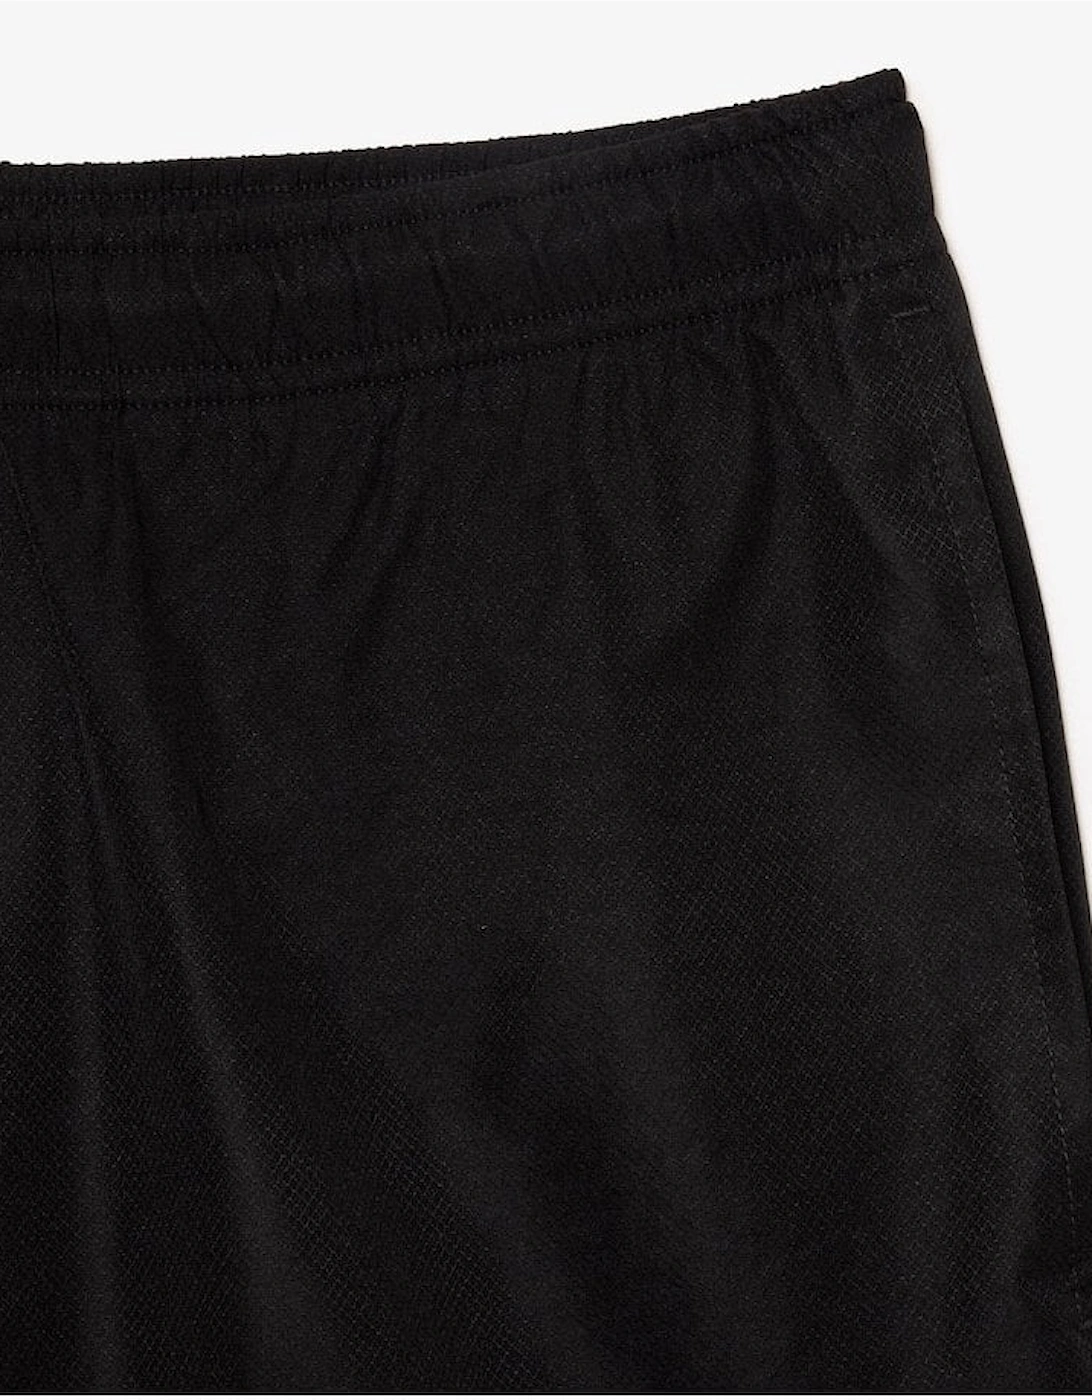 Men's Black Sport Shorts